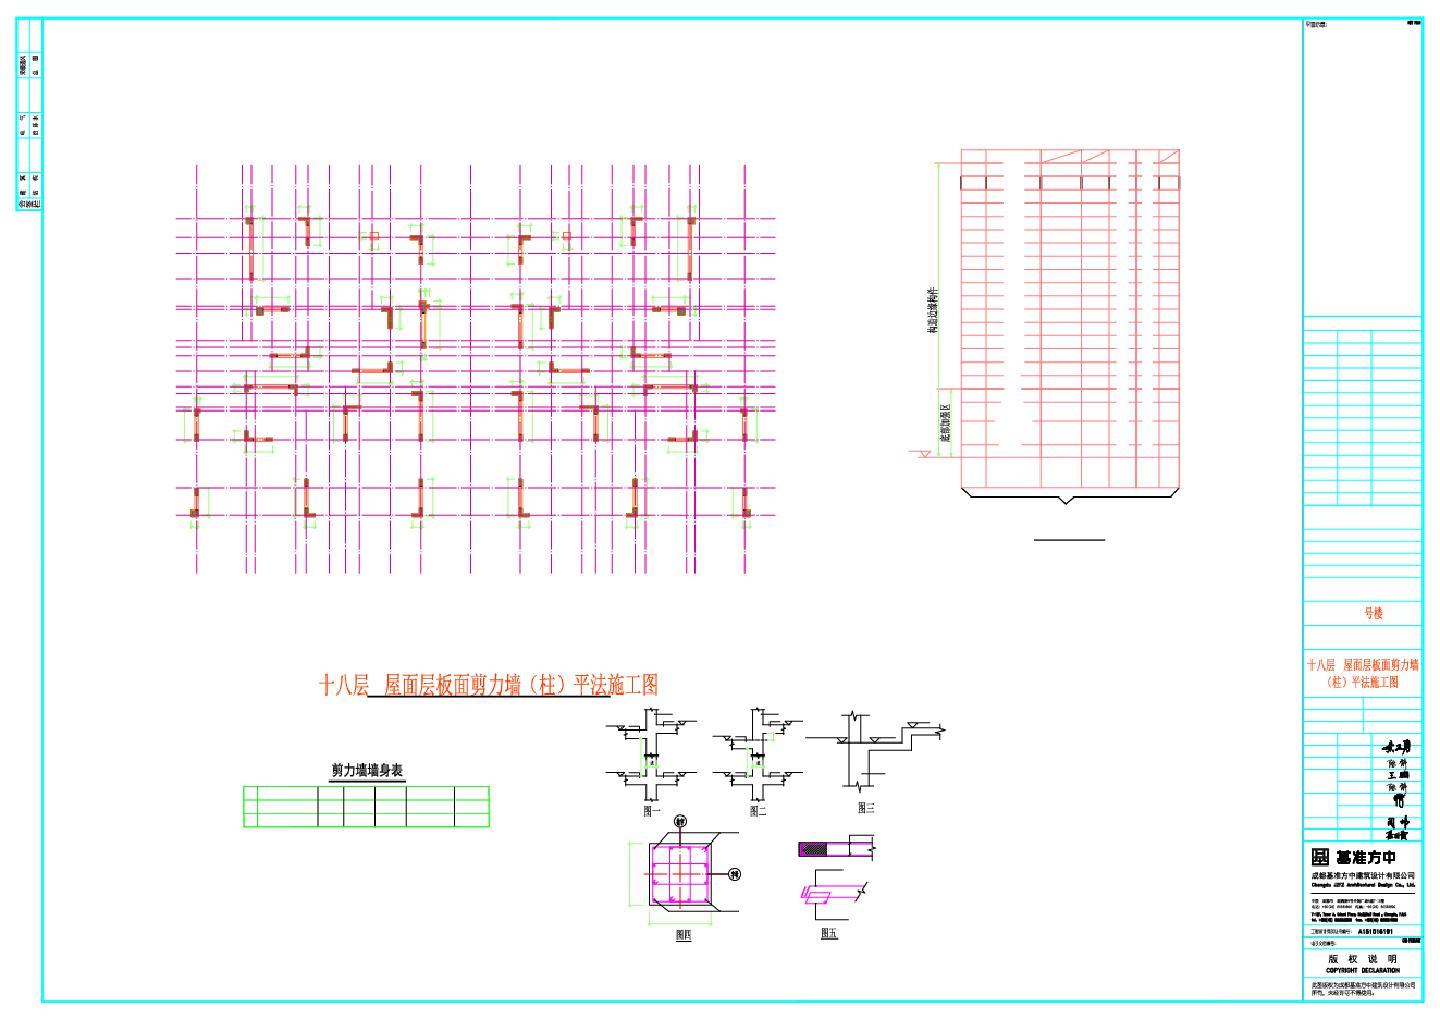 W17 W18 十八层 屋面层板面剪力墙（柱）平法施工图及详图 CAD图